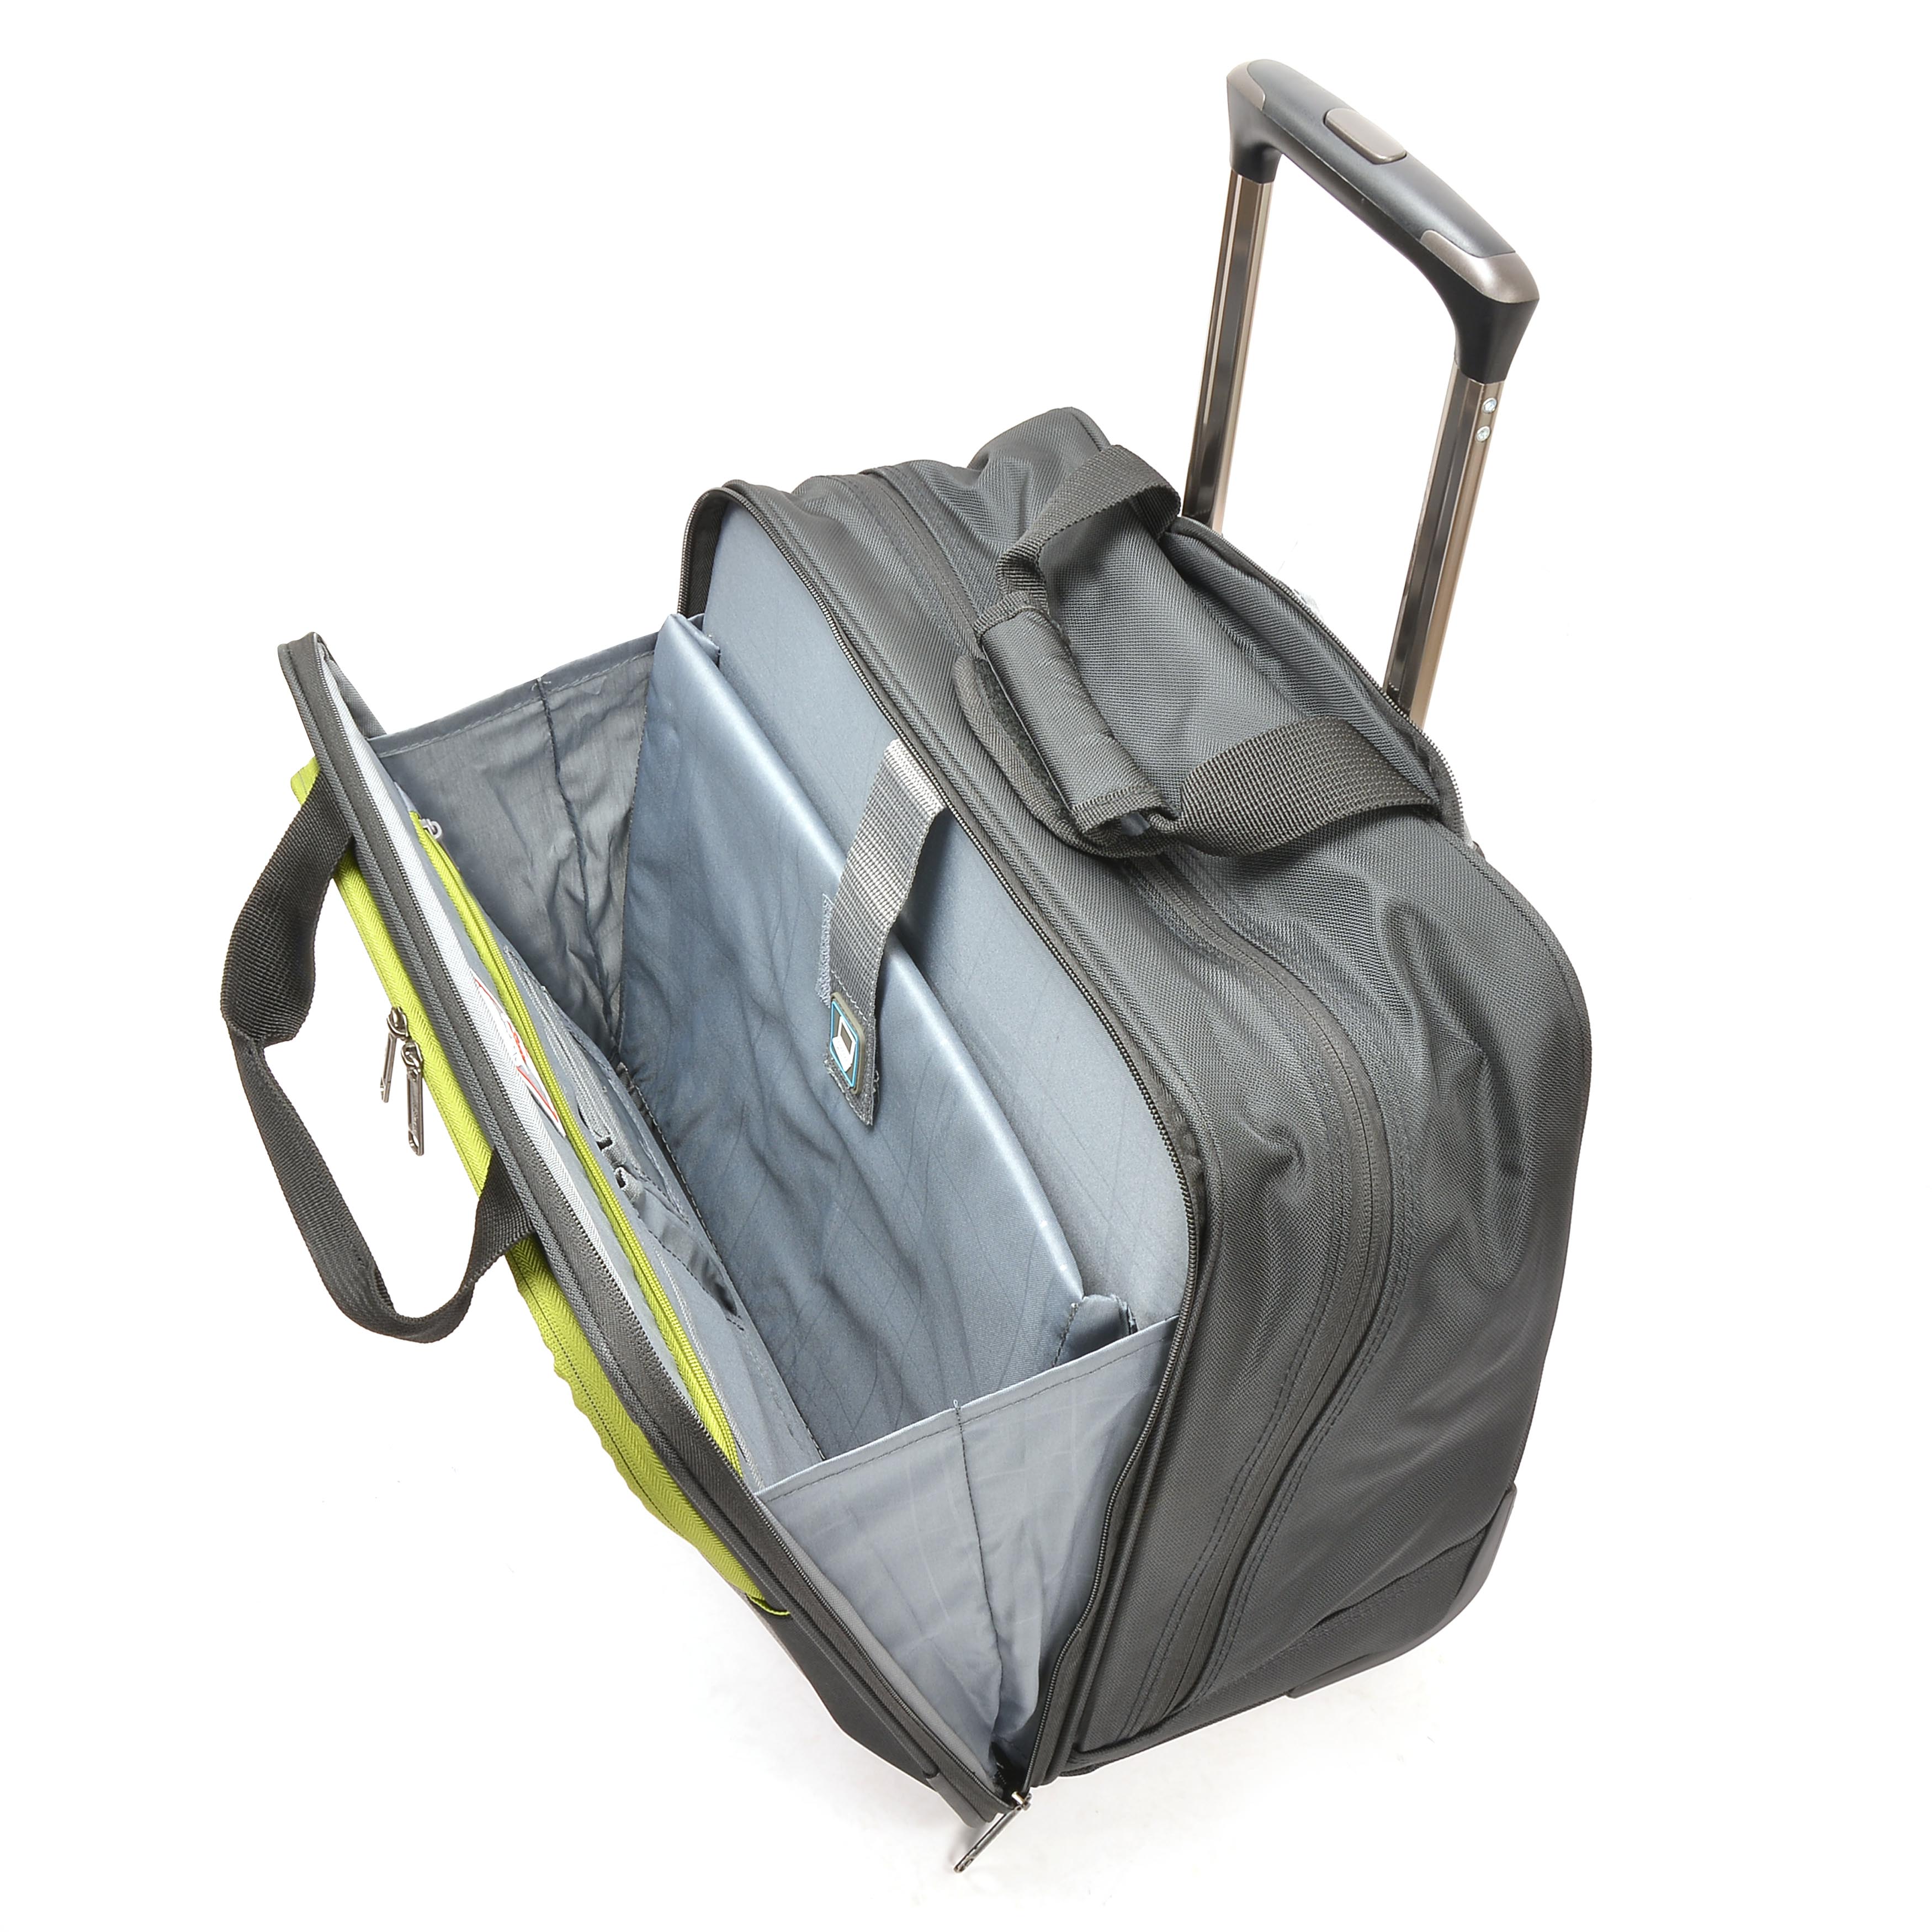 Pilotcase by Eminent luggage trolley handbag  perfect for travelling (V754-17 BK) - buyluggageonline